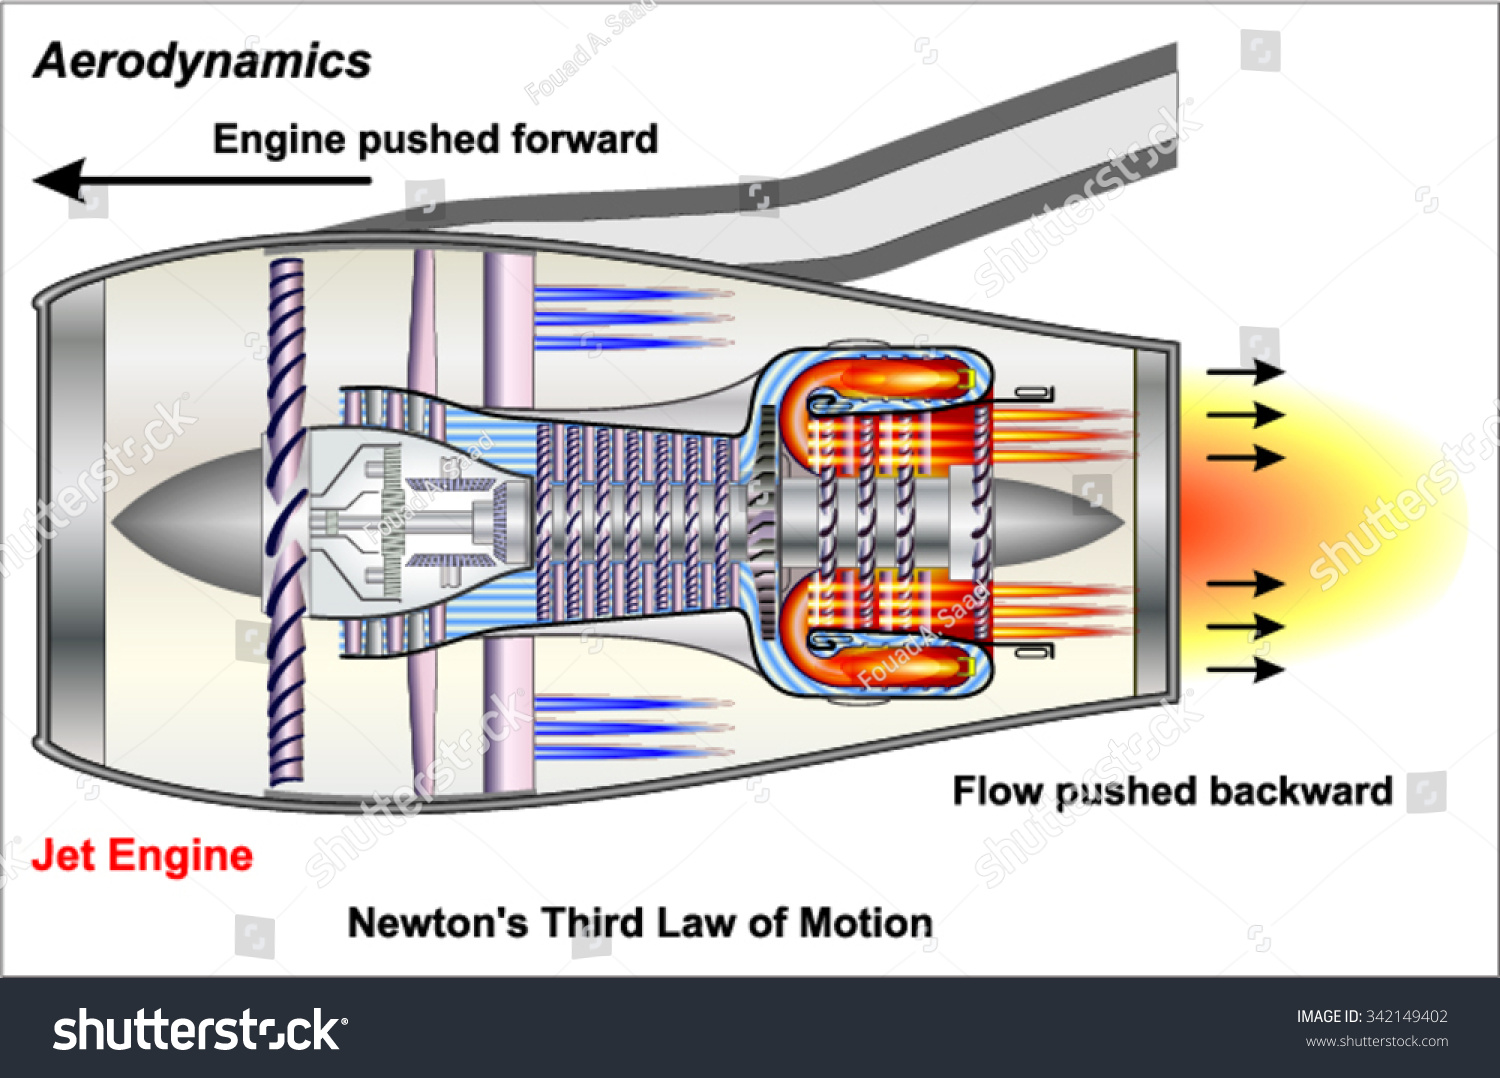 Newtons Third Law Of Motion Aerodynamics Stock Vector Illustration 342149402 Shutterstock 3081